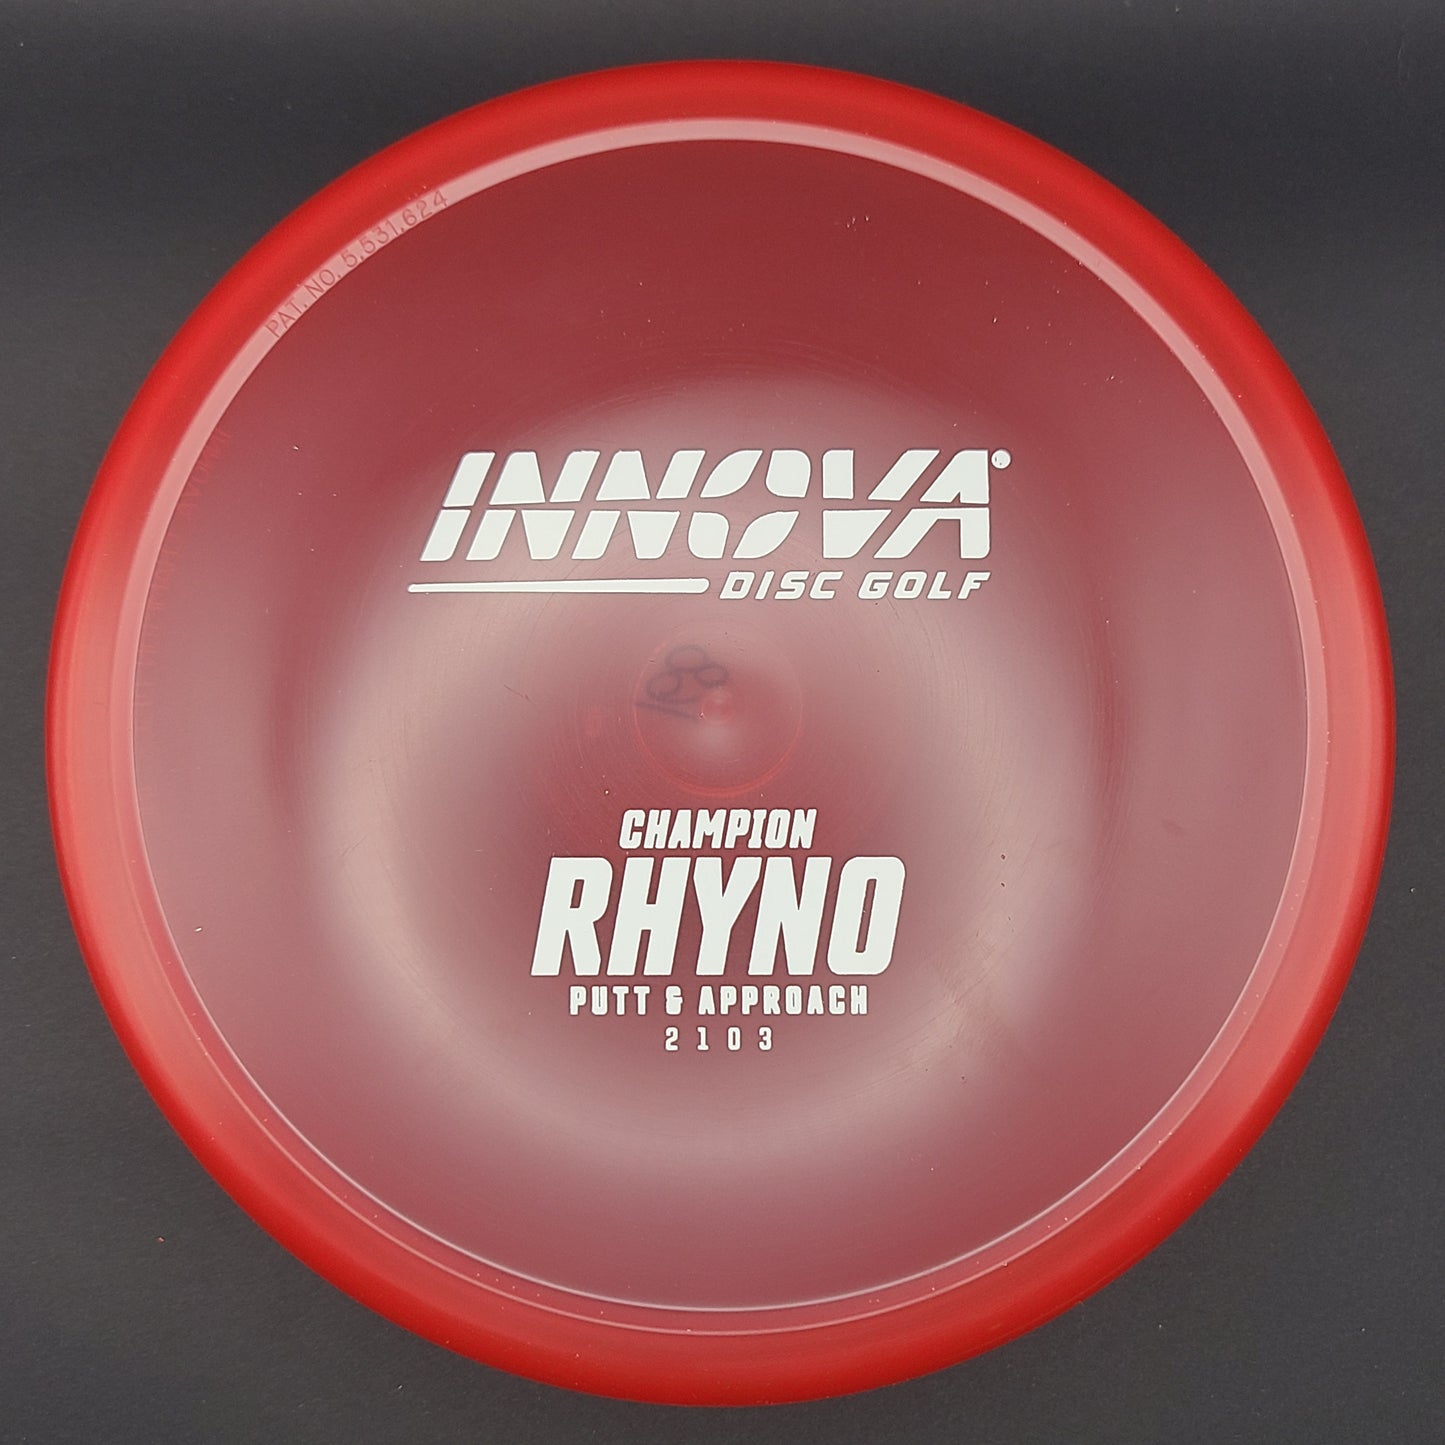 Innova - Rhyno - Champion